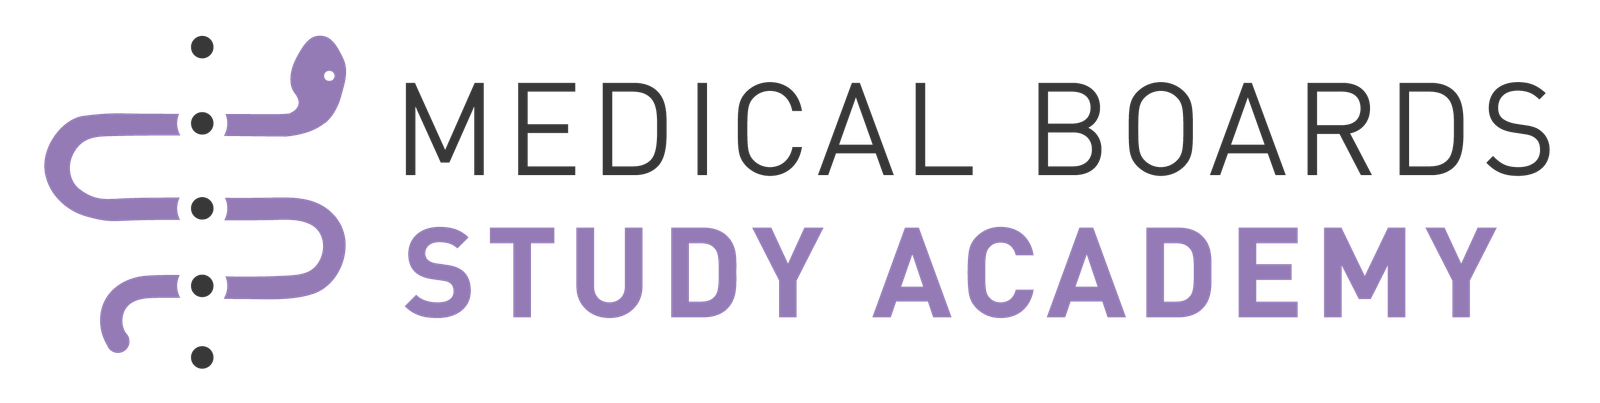 Medical Boards Study Academy